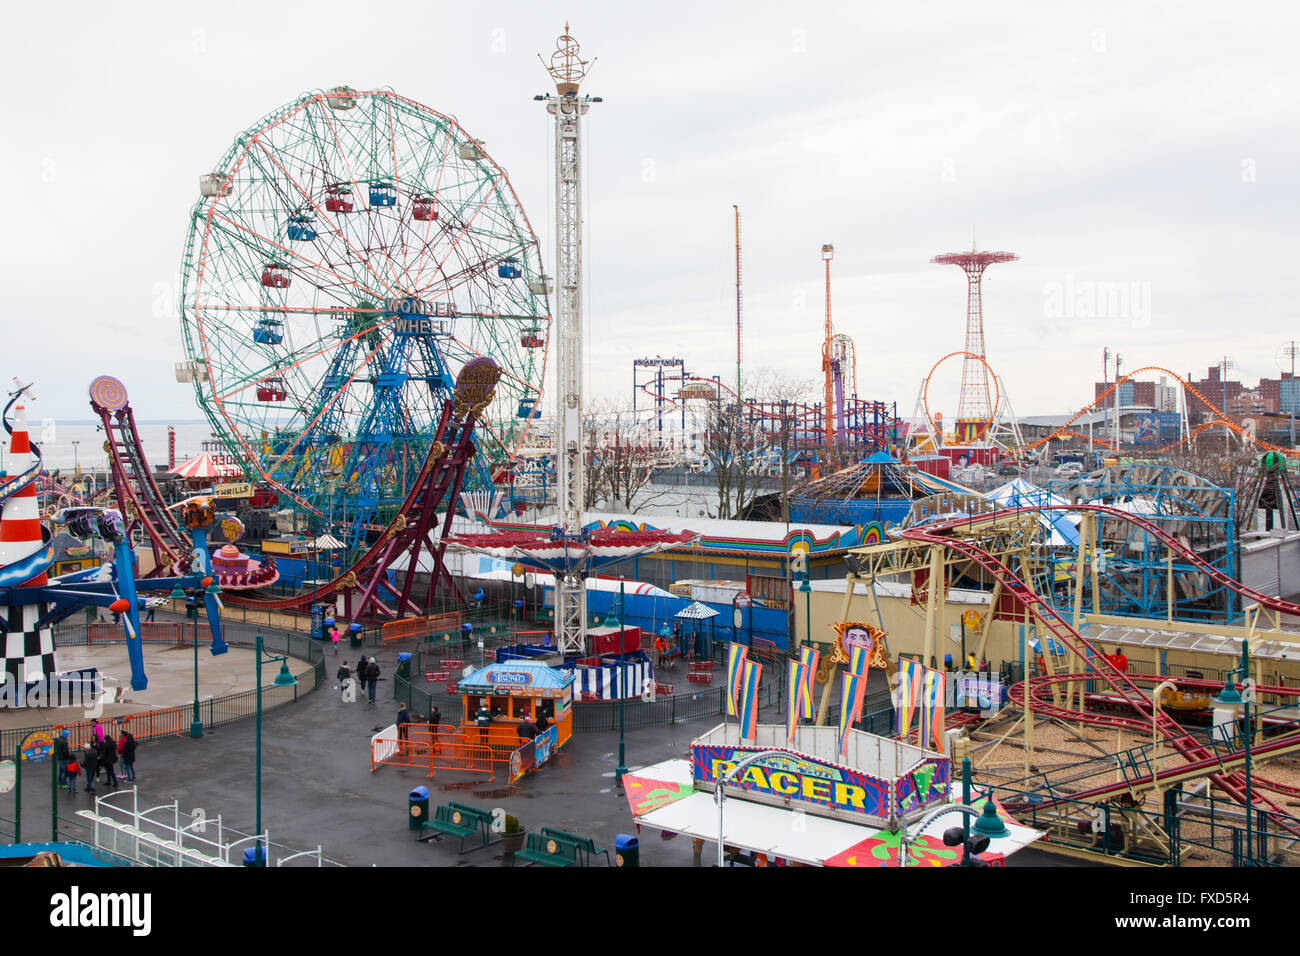 Il Luna Park,Coney Island a Brooklyn, New York, Stati Uniti d'America. Foto Stock